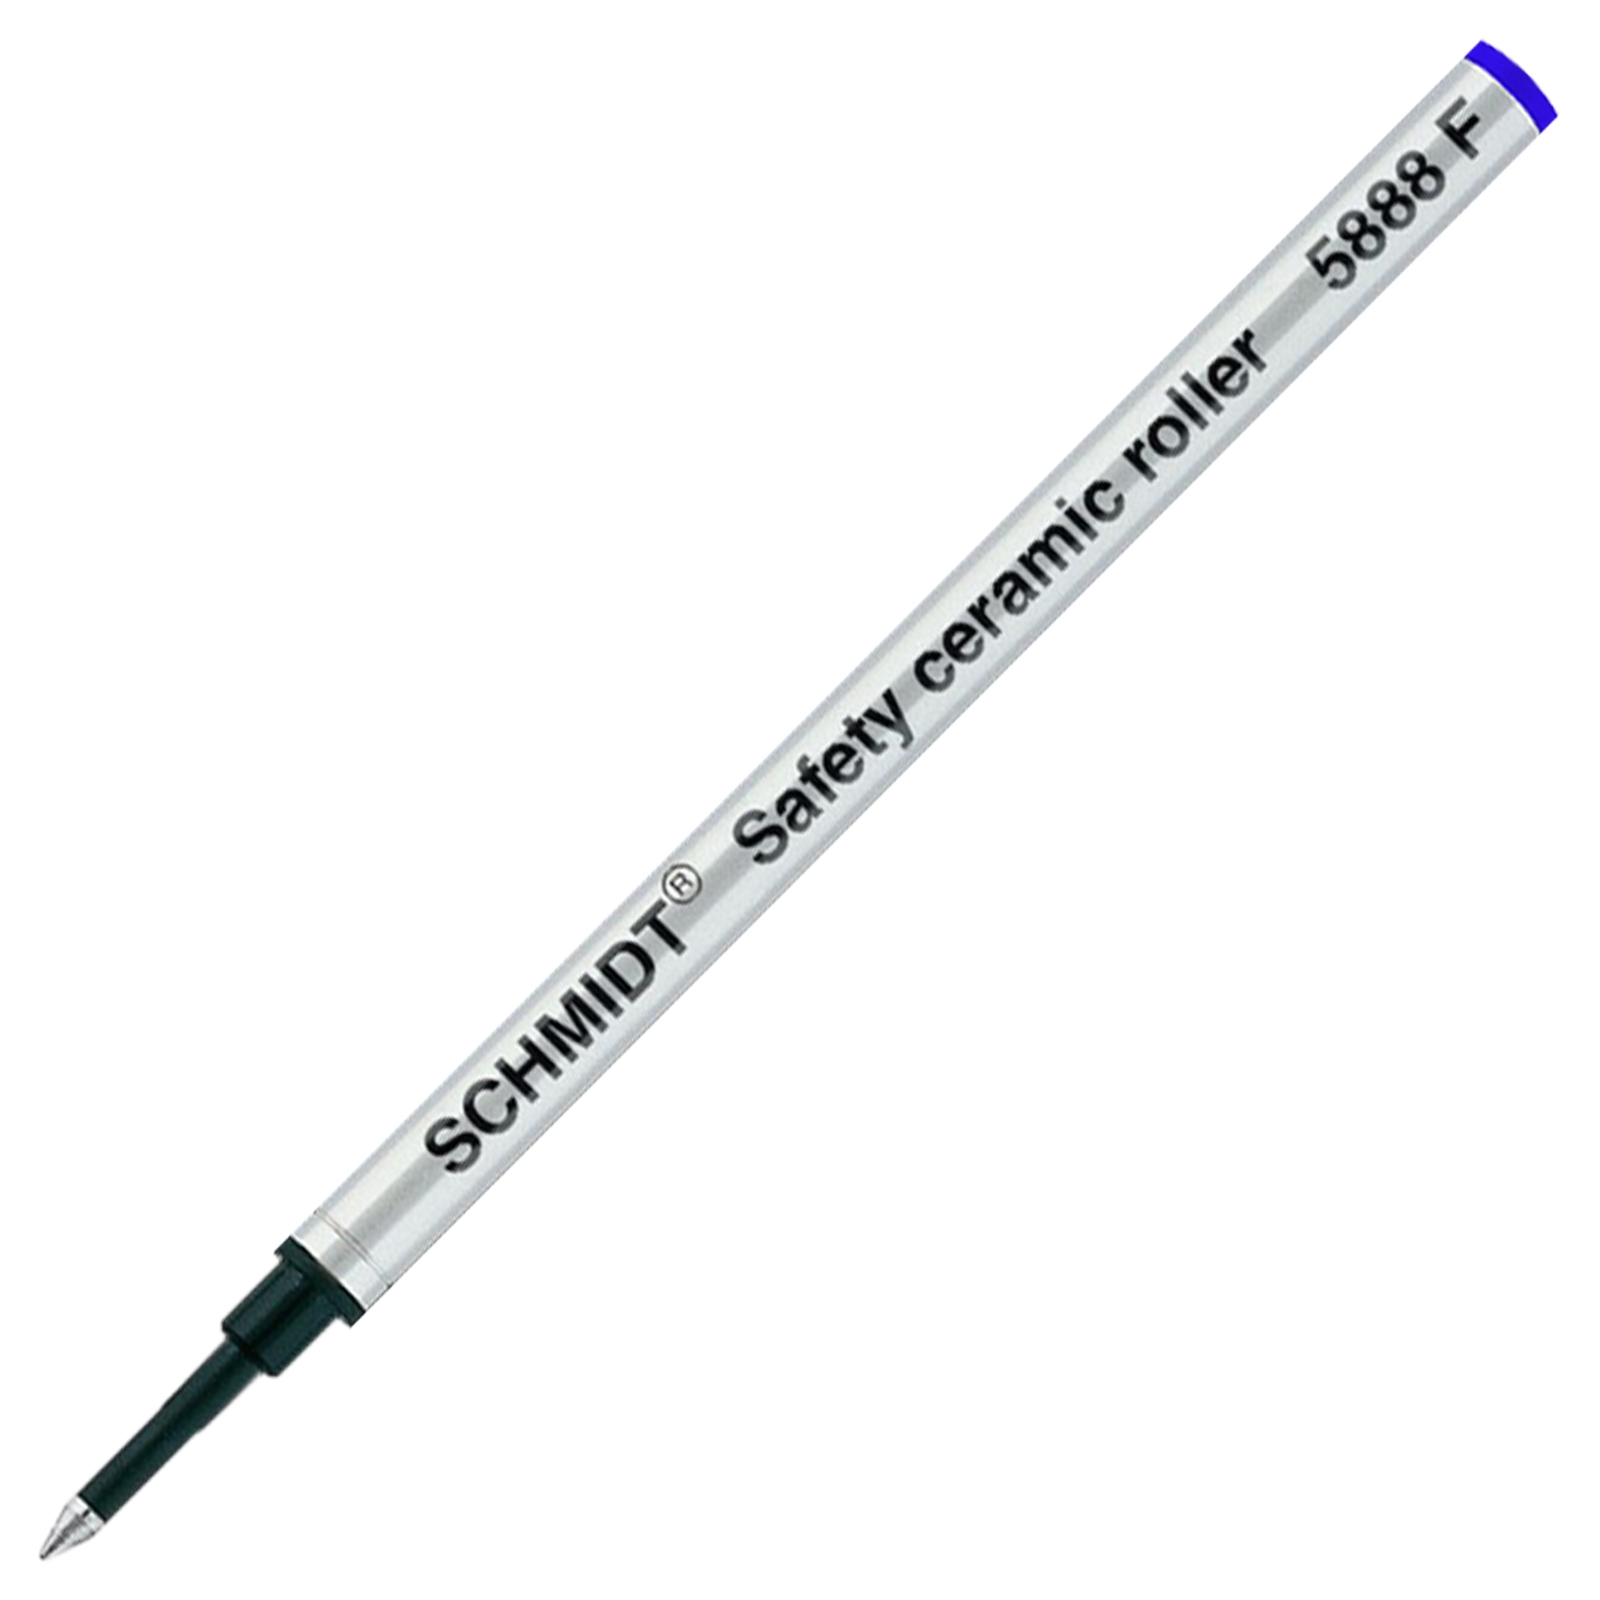 Schmidt 5888 Rollerball Metal Refill - Blue Ink Fine